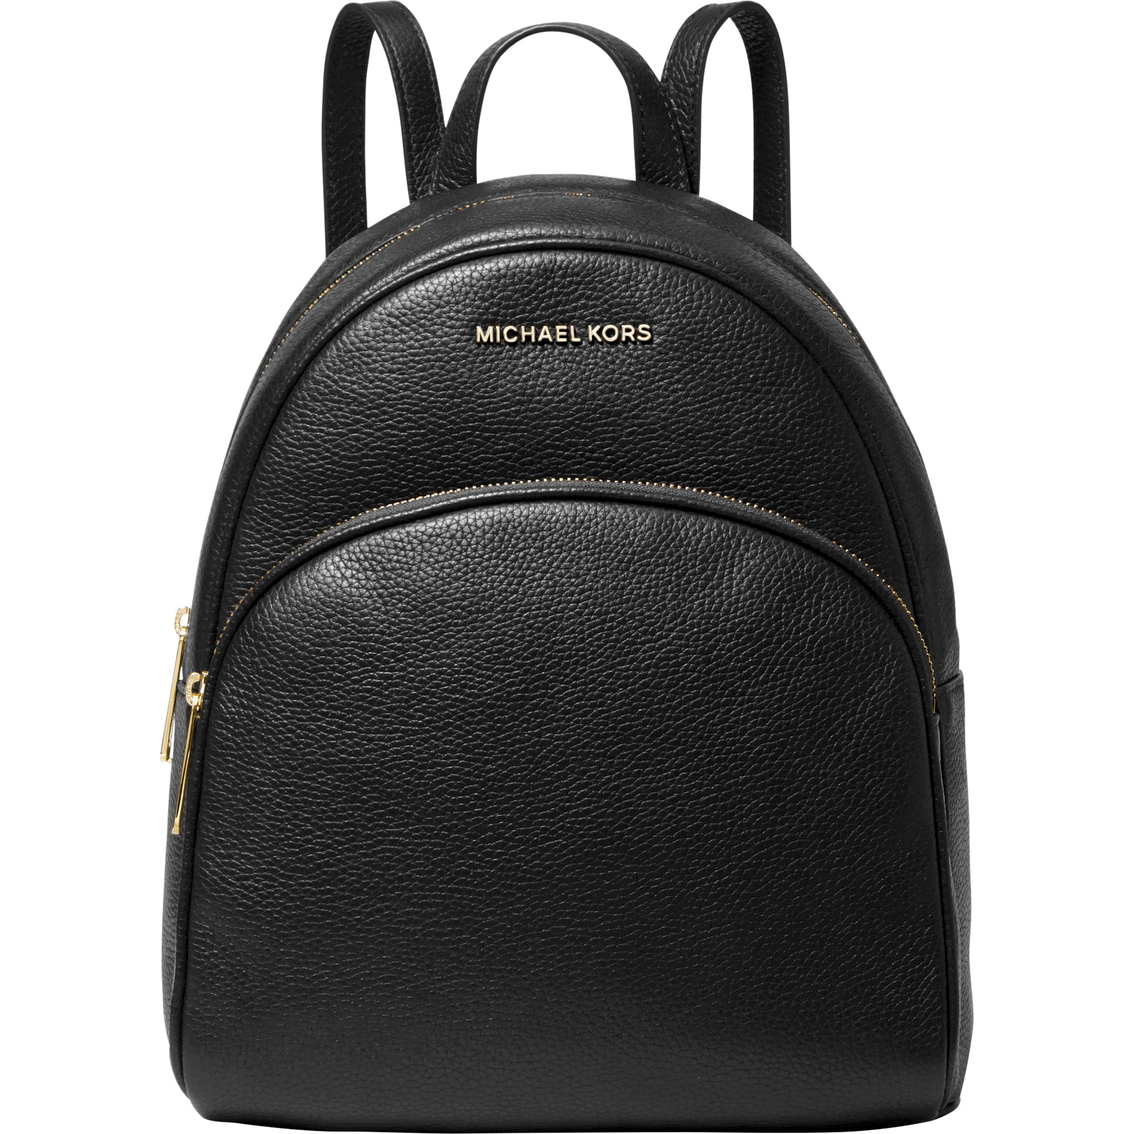 Michael Kors Abbey Medium Leather Backpack | Handbags | Clothing ...